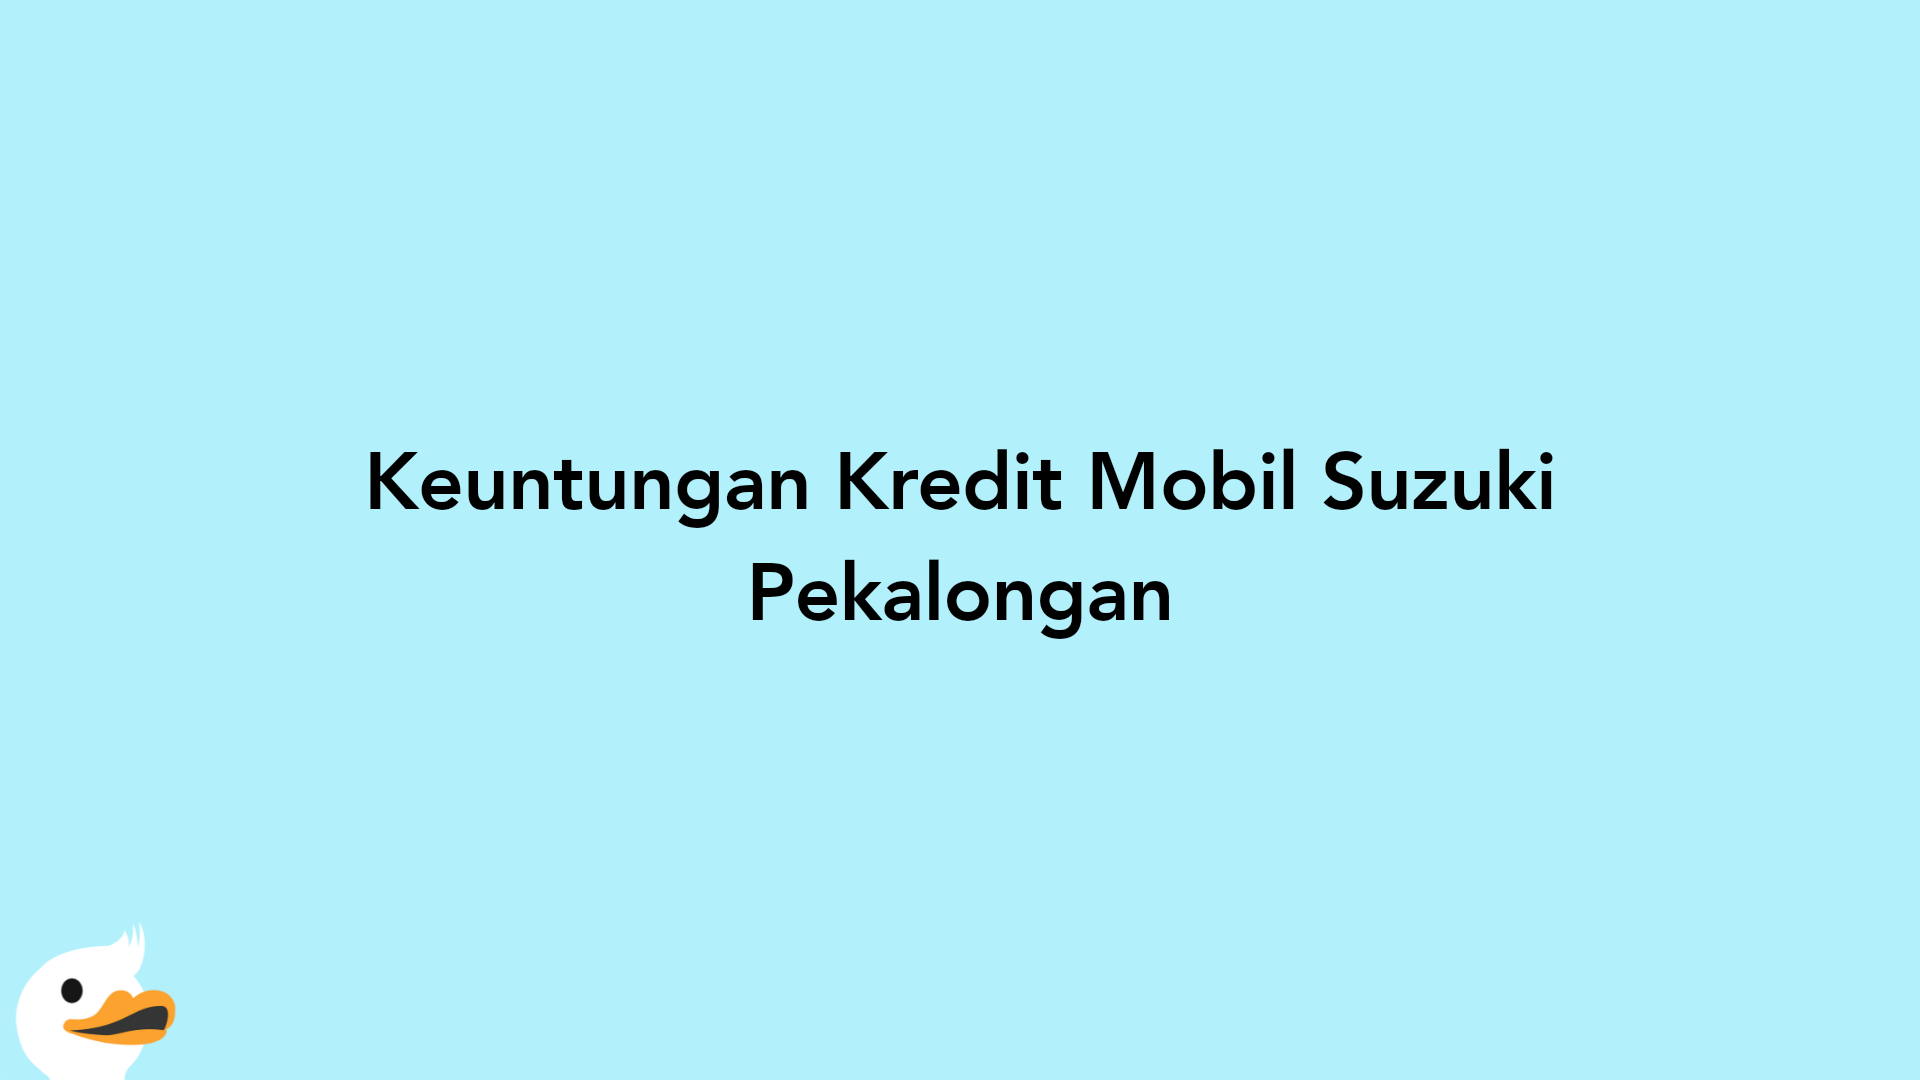 Keuntungan Kredit Mobil Suzuki Pekalongan